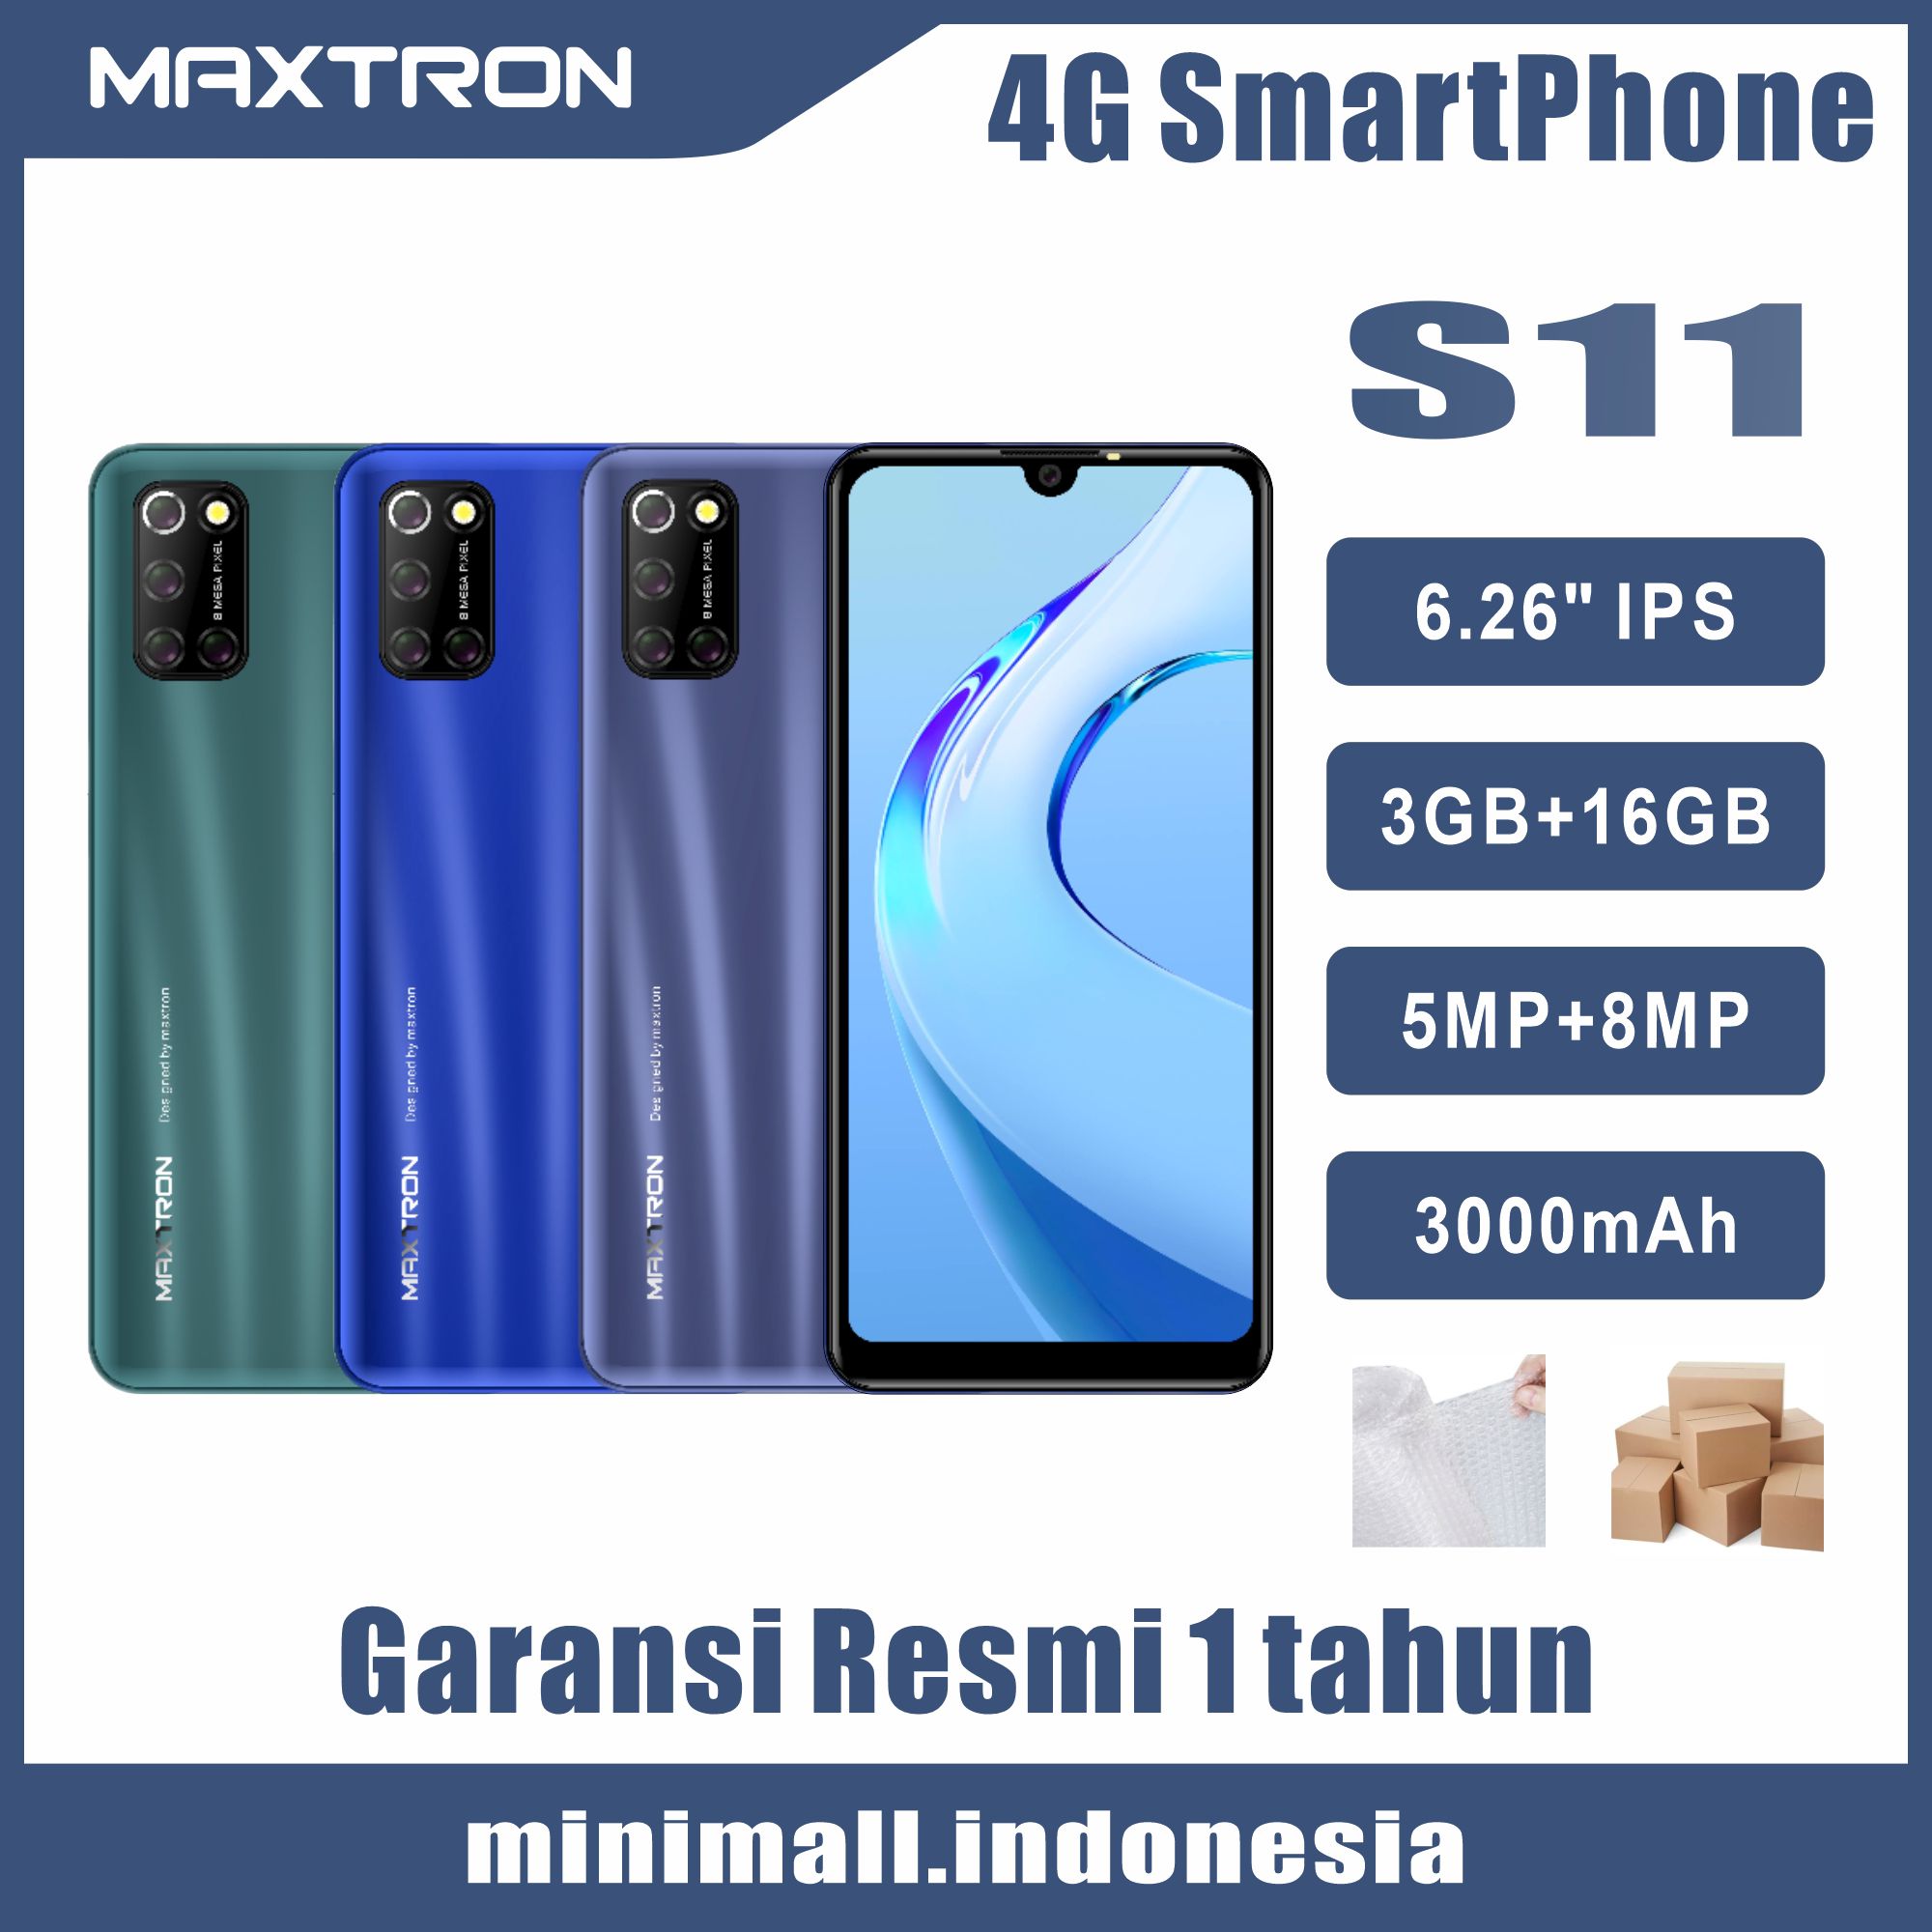 Maxtron S11 RAM 3GB/16GB 4G Smart Phone Android Garansi Resmi 1 Tahun